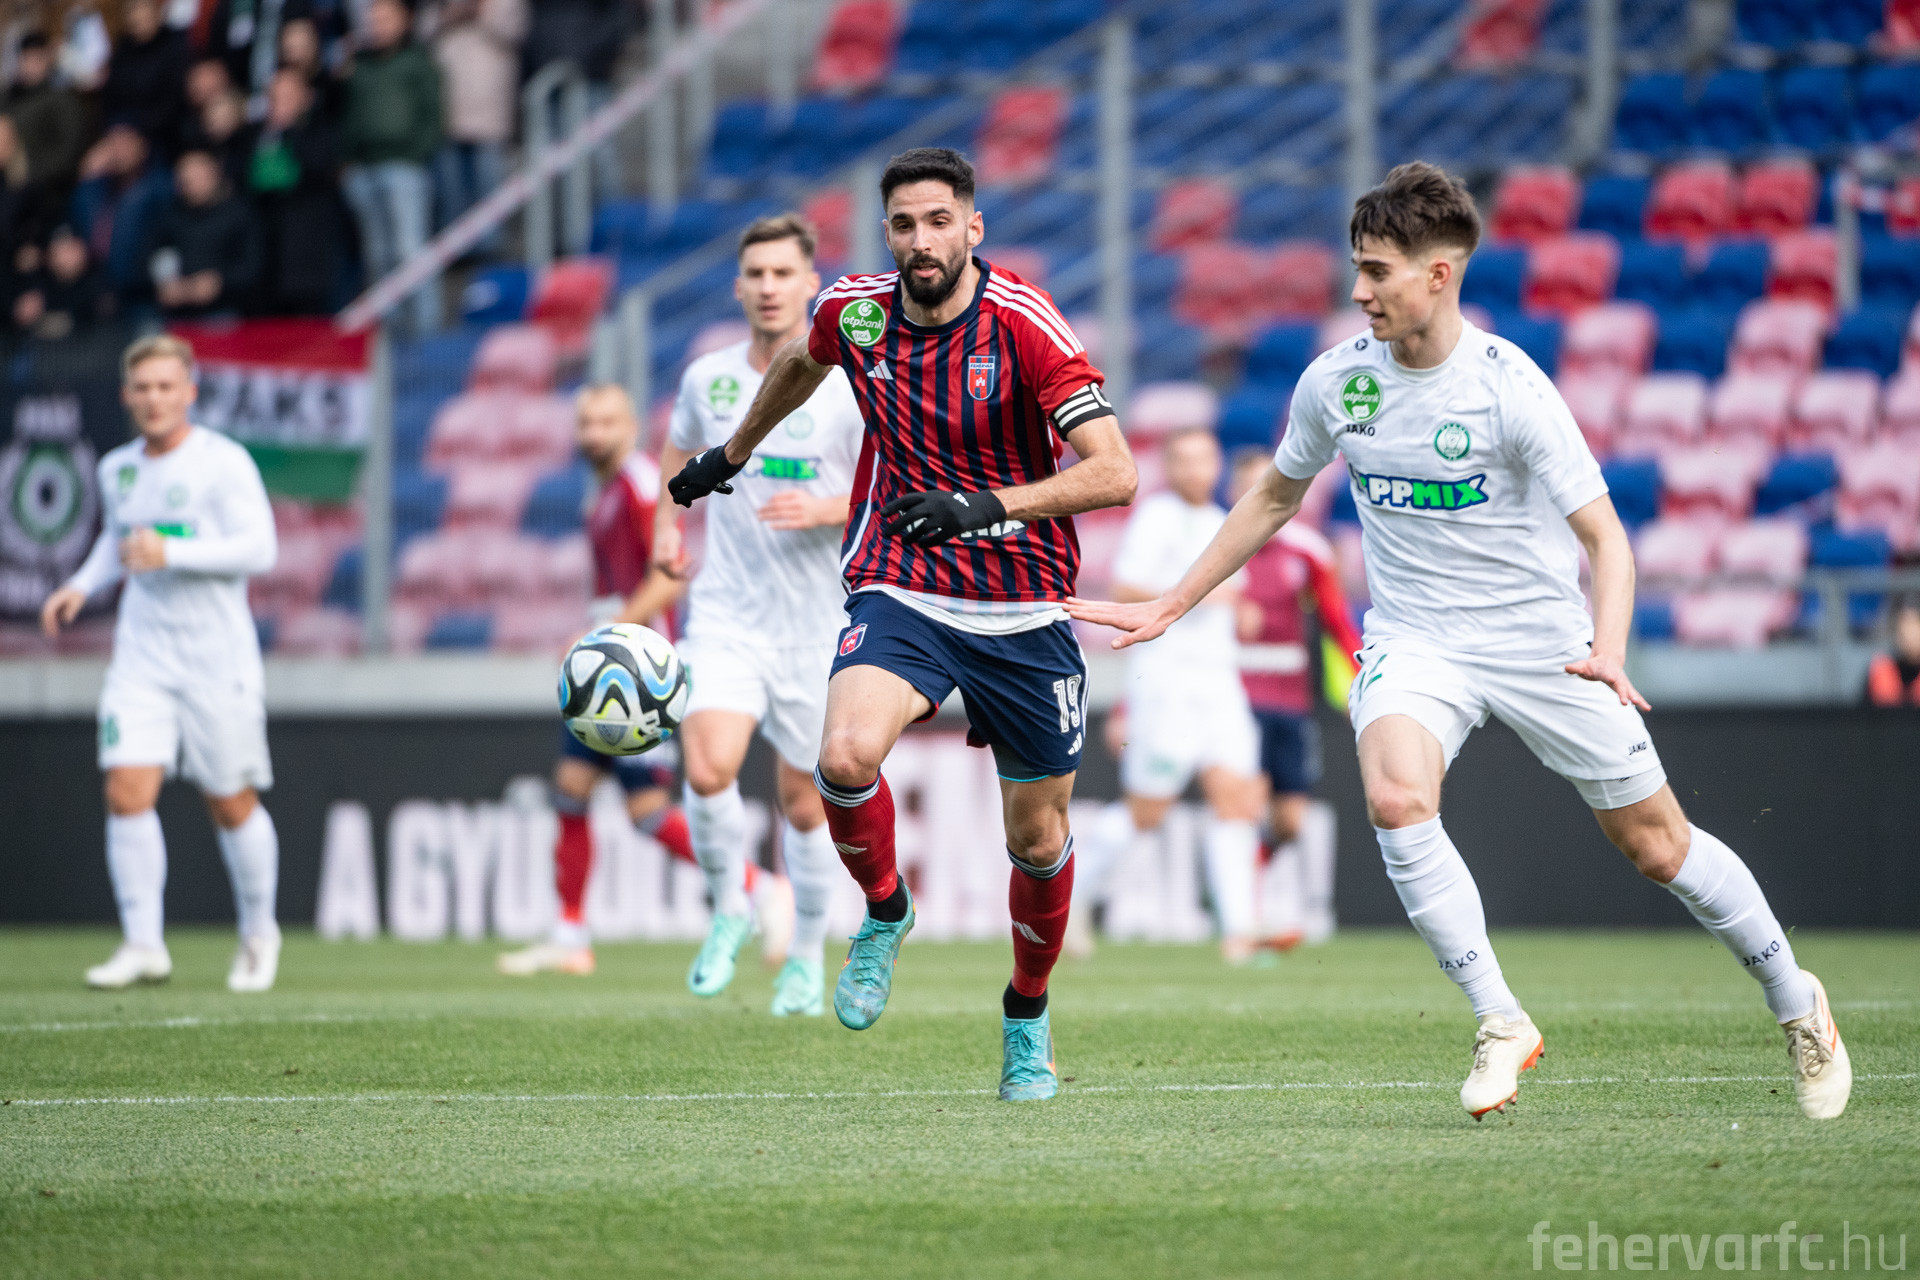 Viktoria FC Szombathe (F) vs Fehervar FC (F) 15/09/2023 14:00